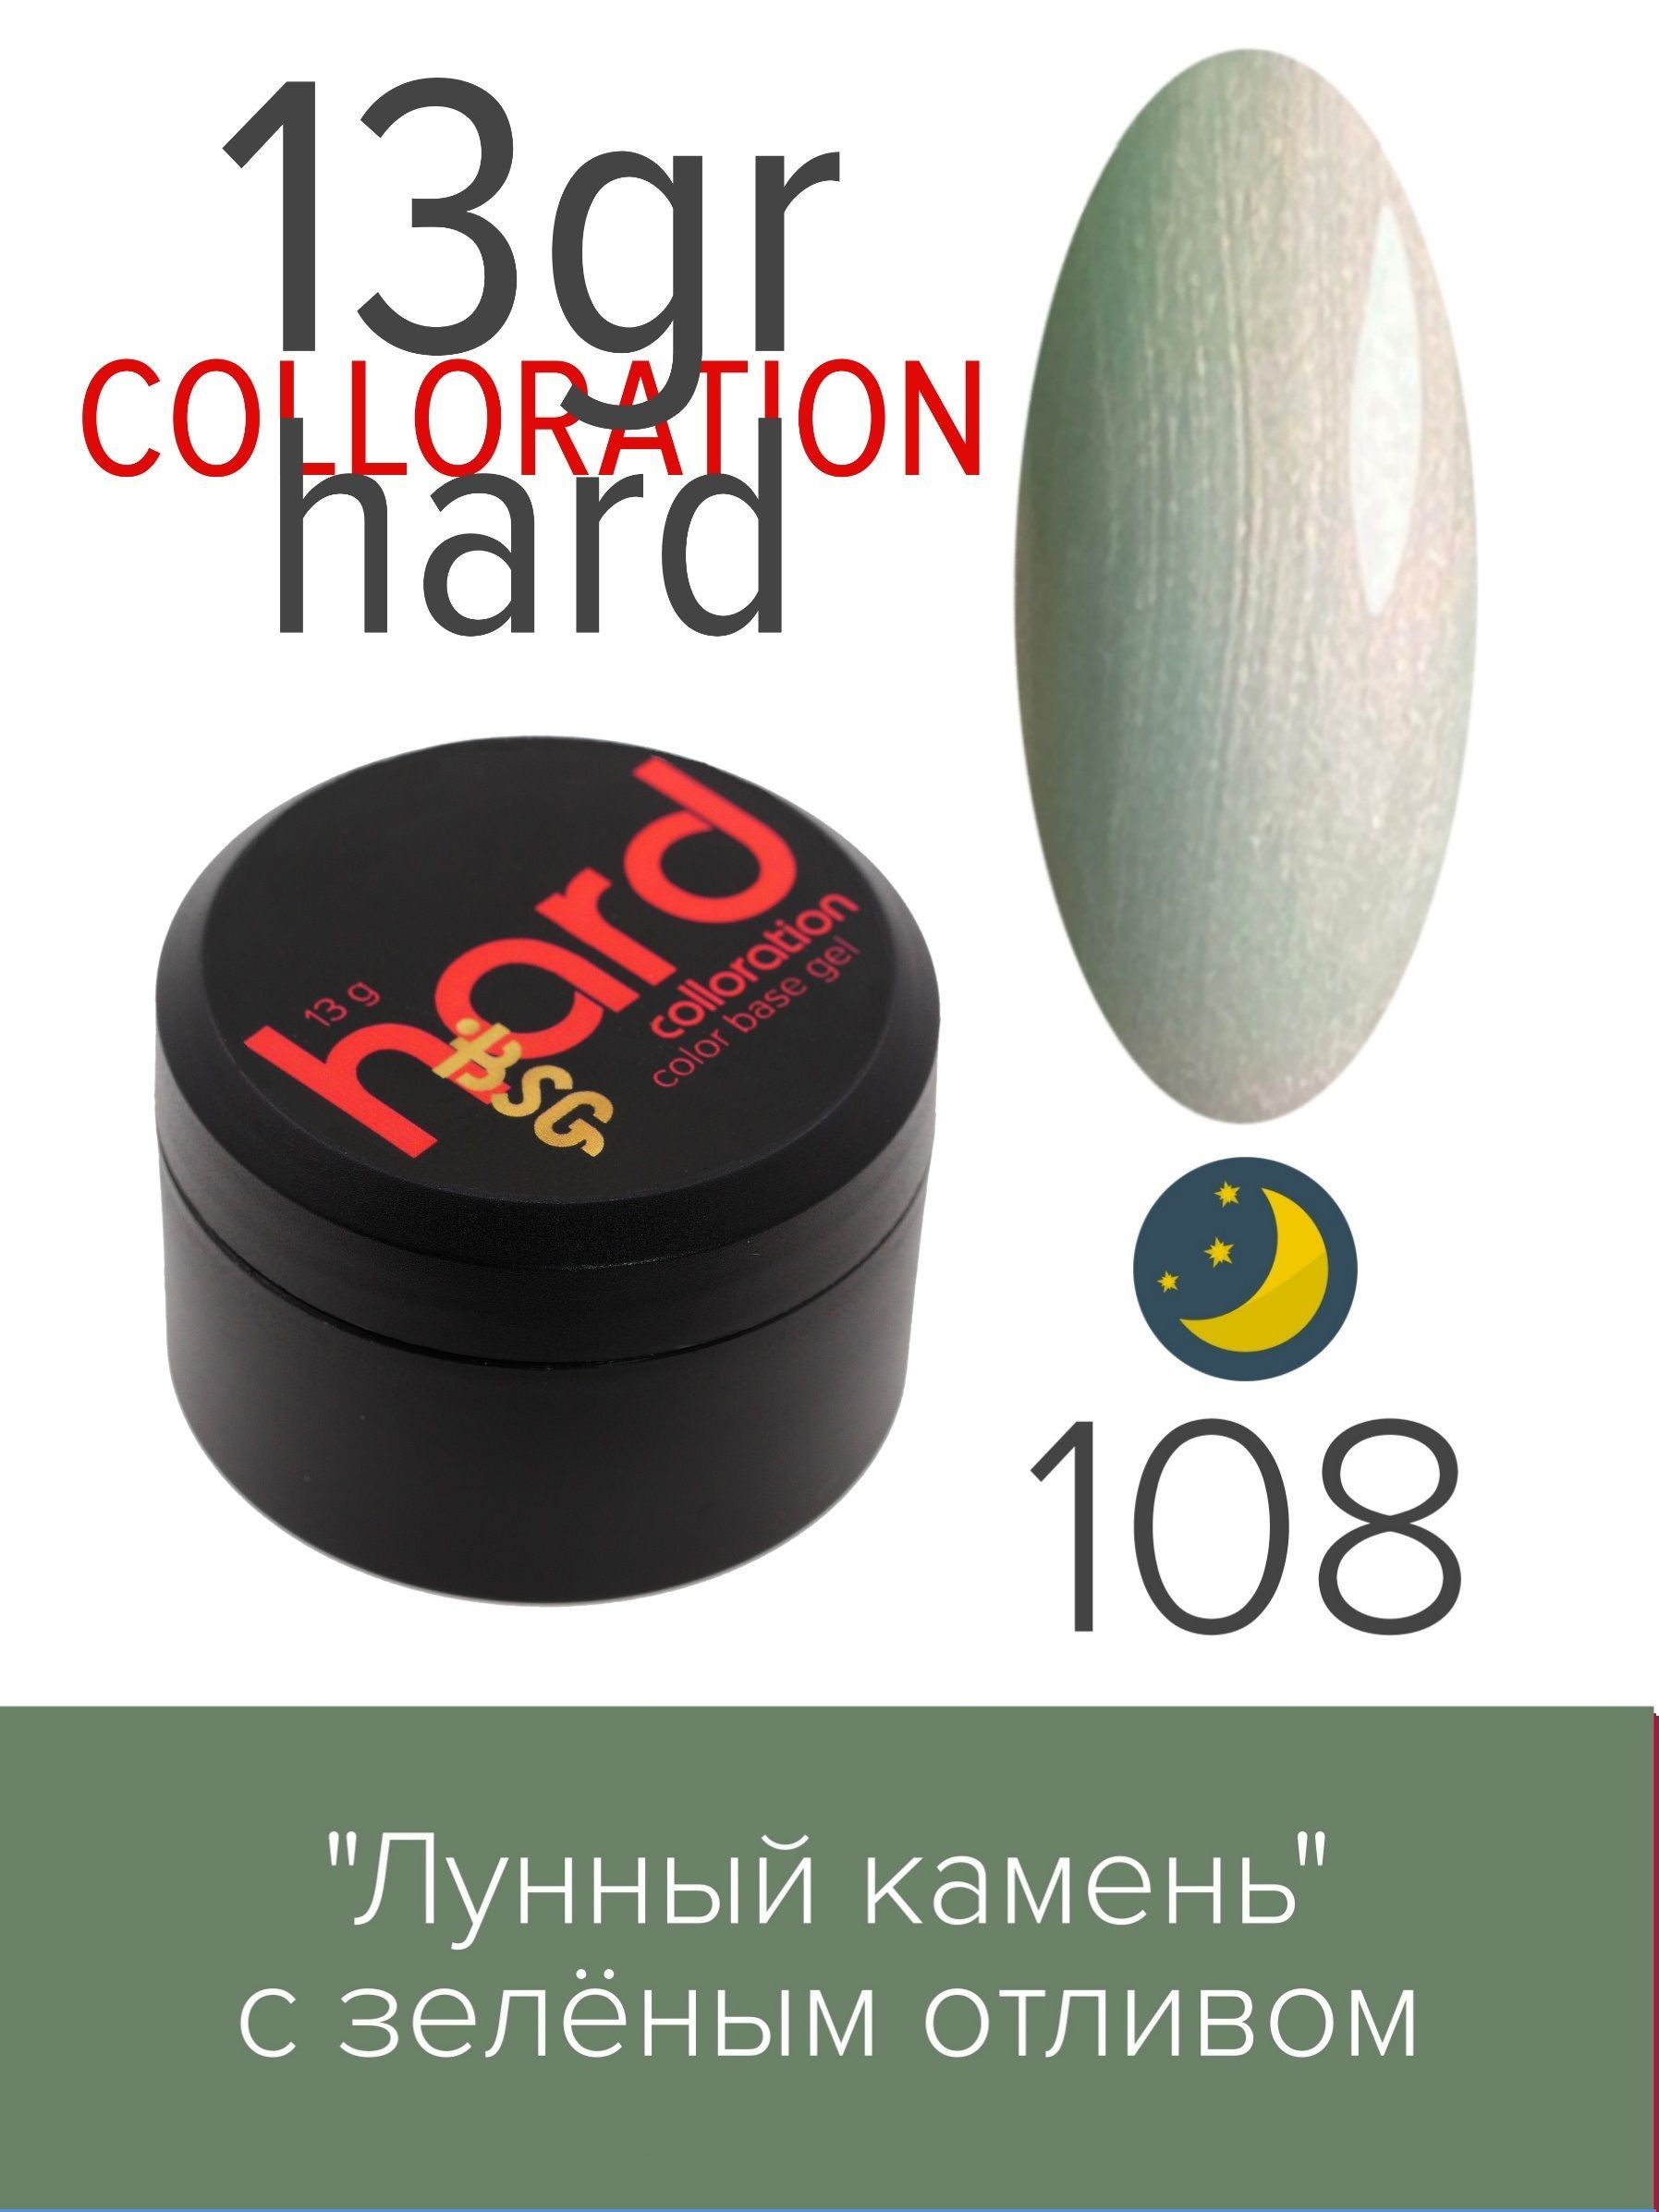 База BSG Colloration Hard цветная жесткая №108